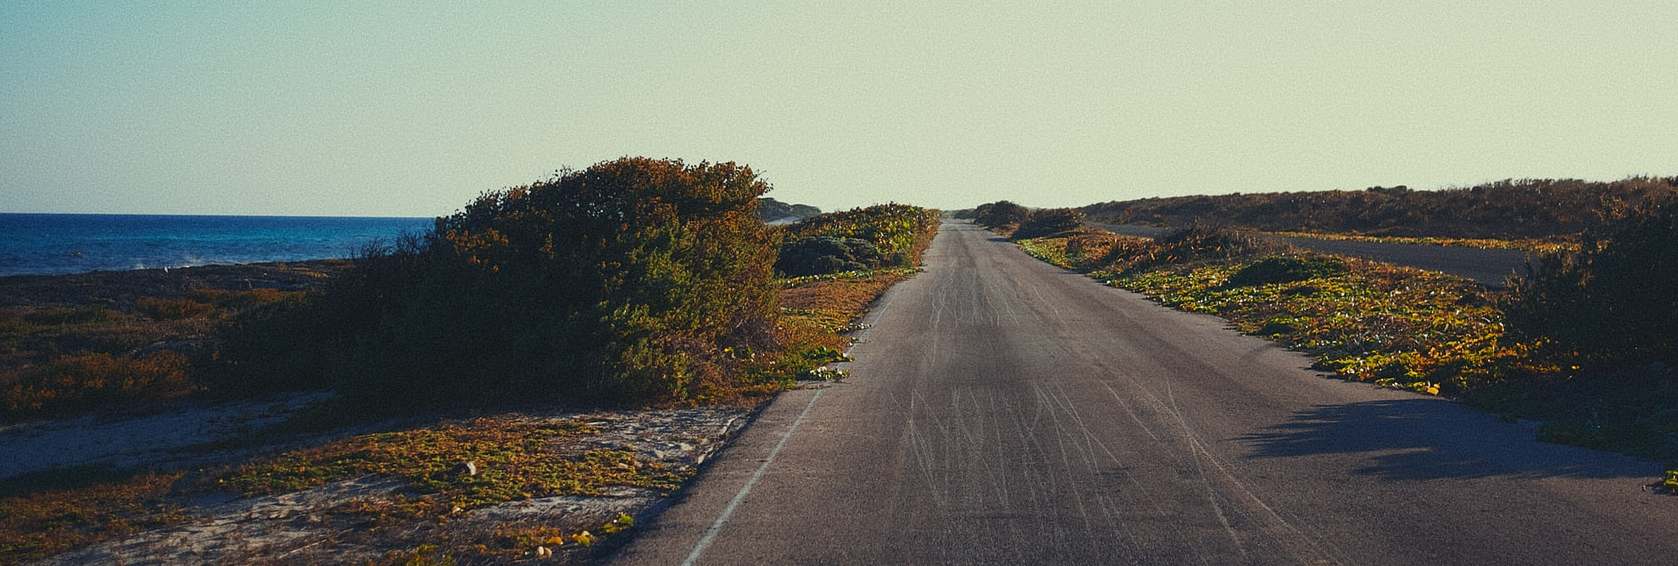 empty road on cozumel